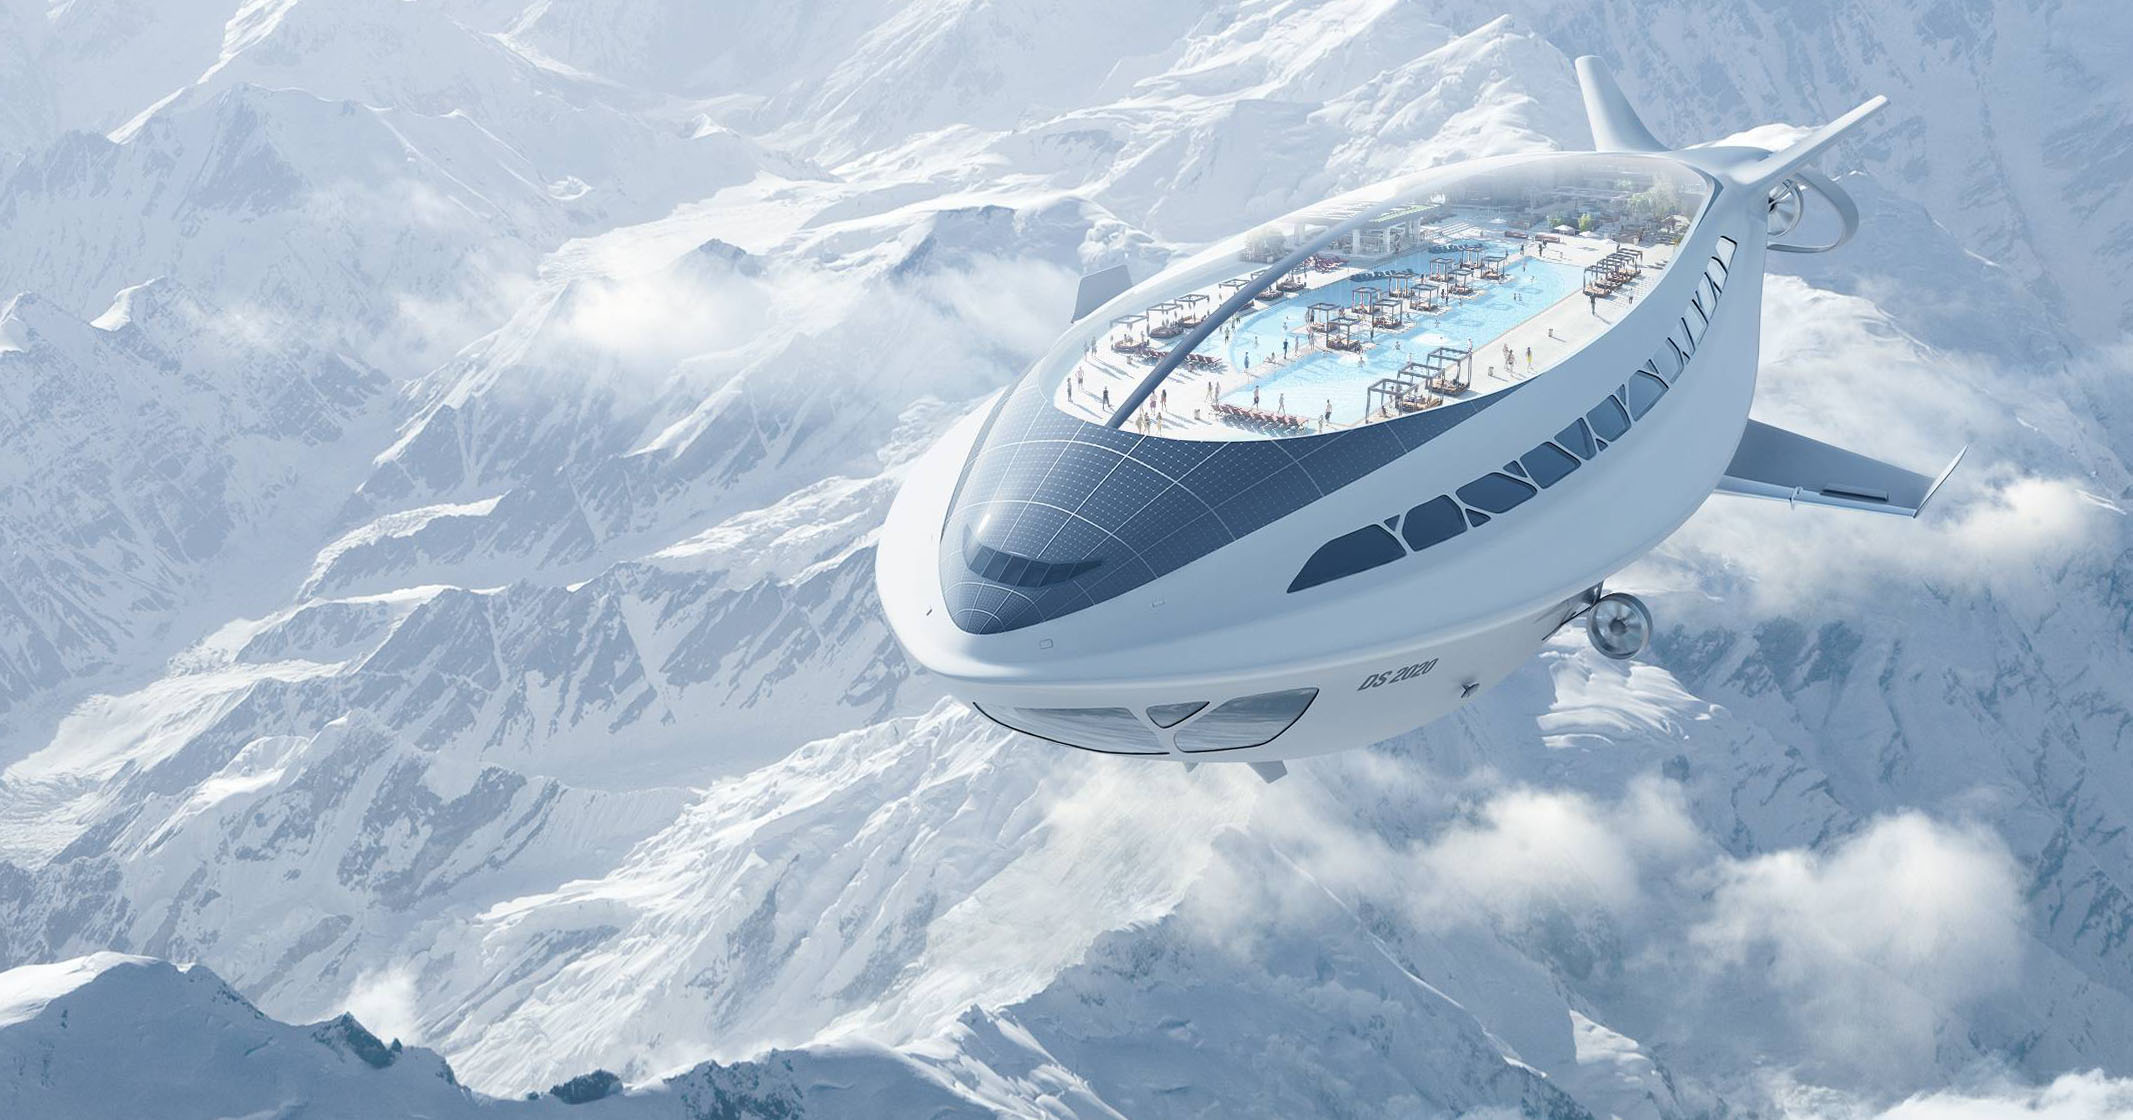 Nonsense Luxury Airship Concept from Dassault